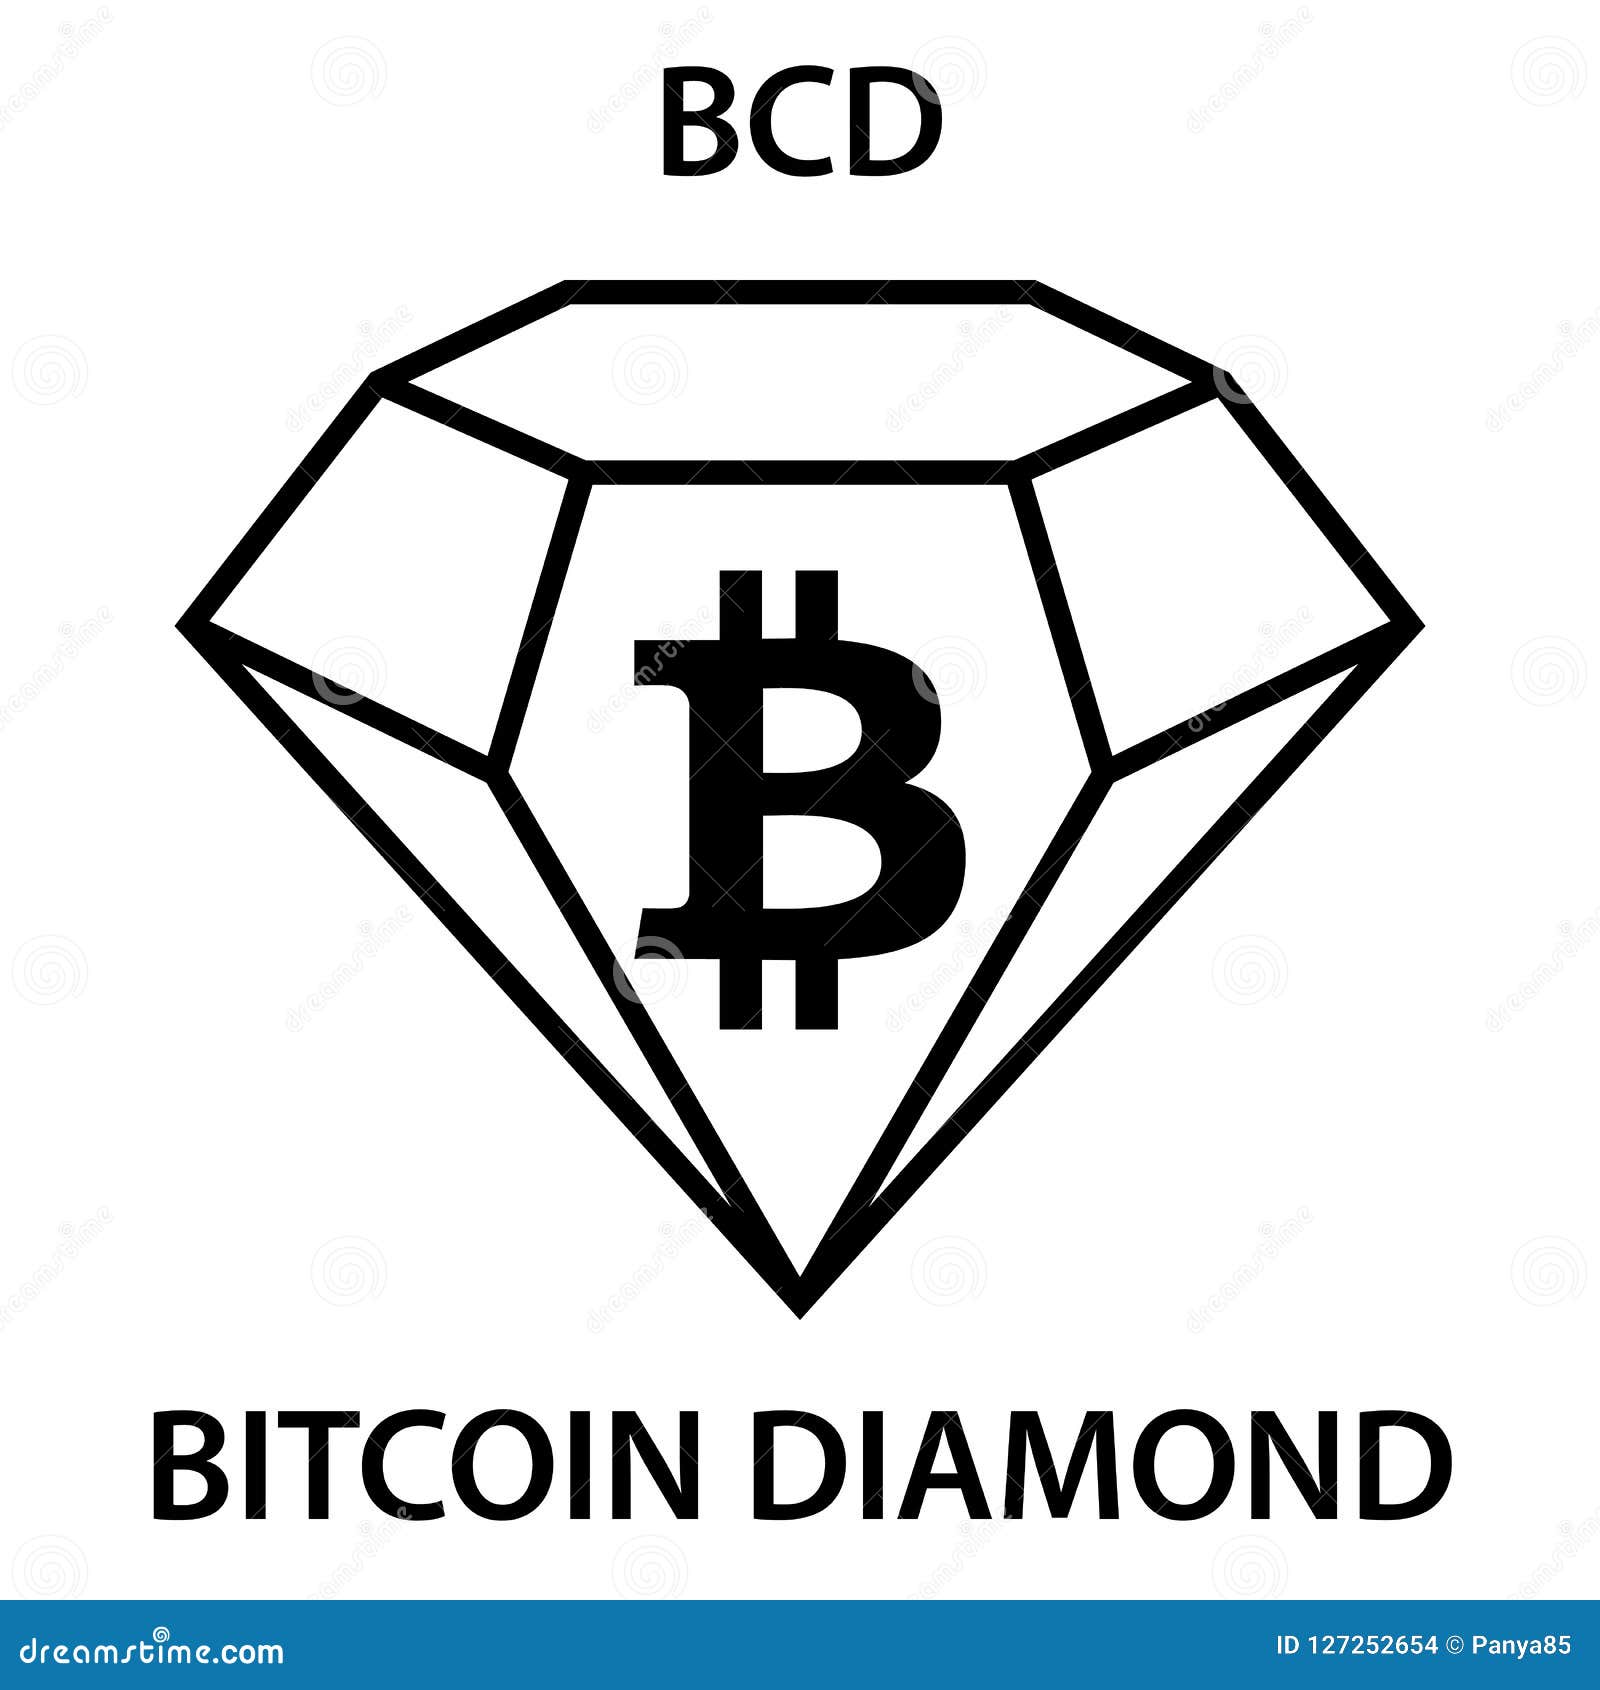 DIAMOND price now, Live DIAMOND price, marketcap, chart, and info | CoinCarp